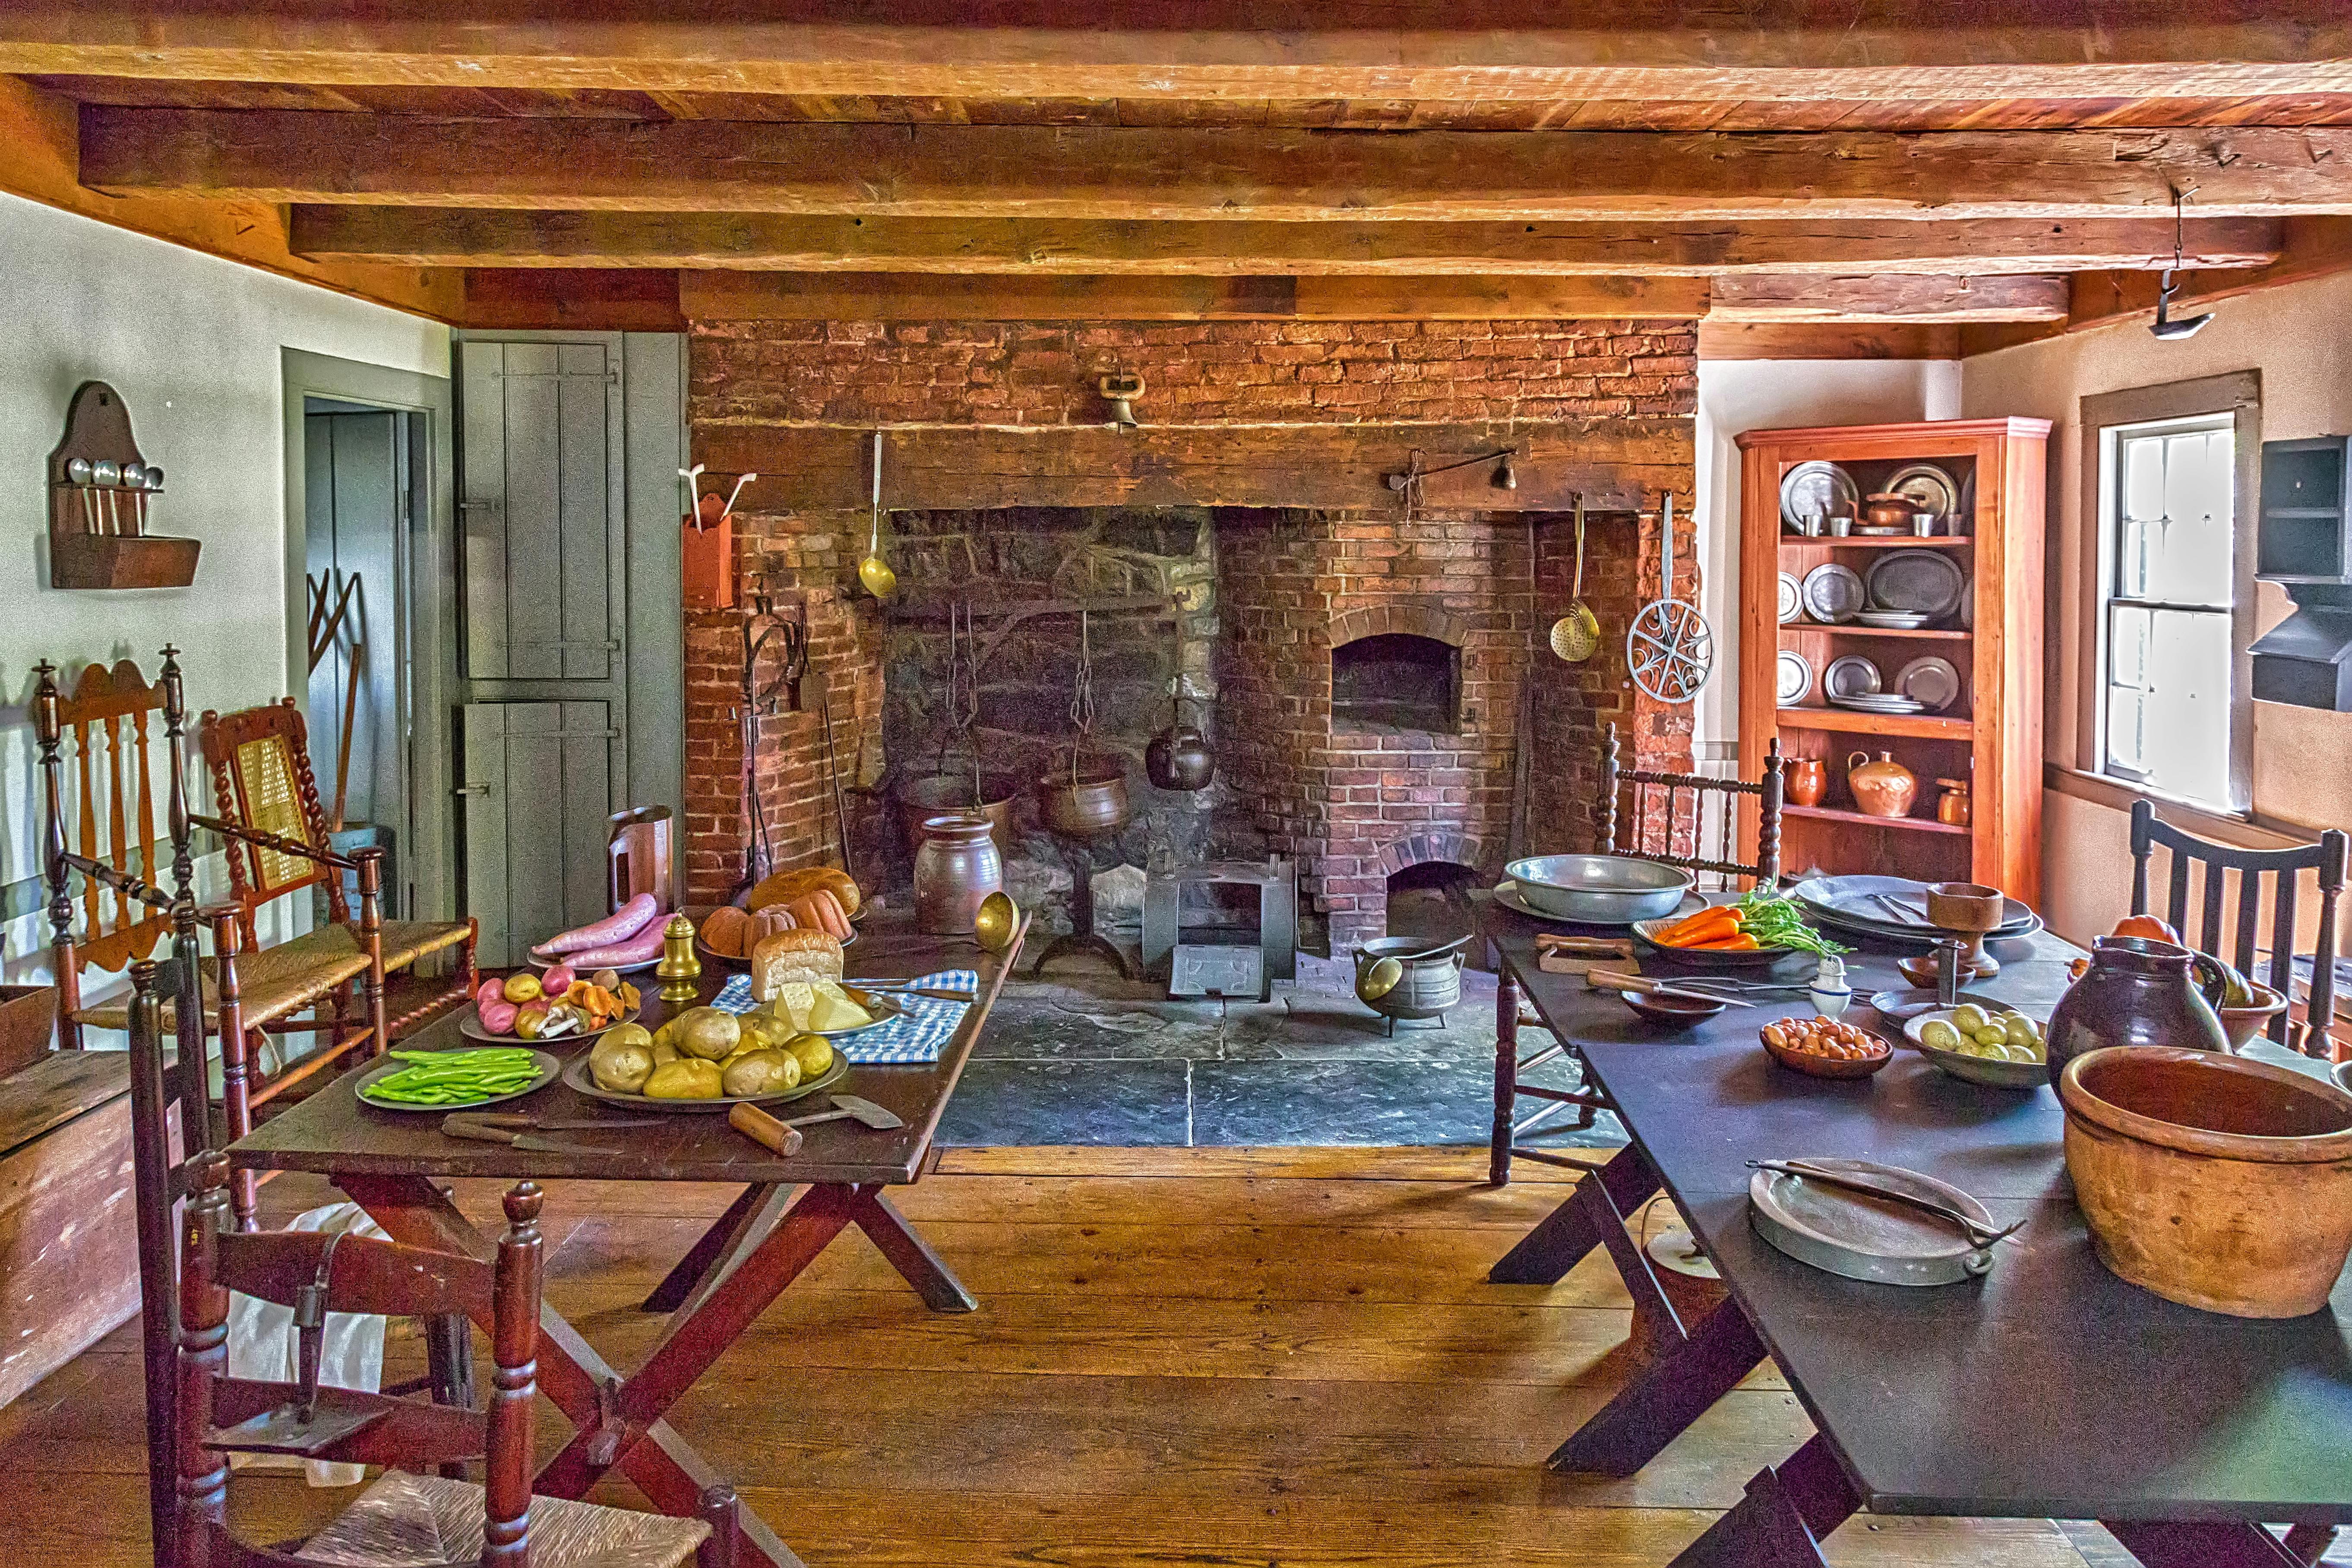 Free stock photo of Brick oven, kitchen, old kitchen